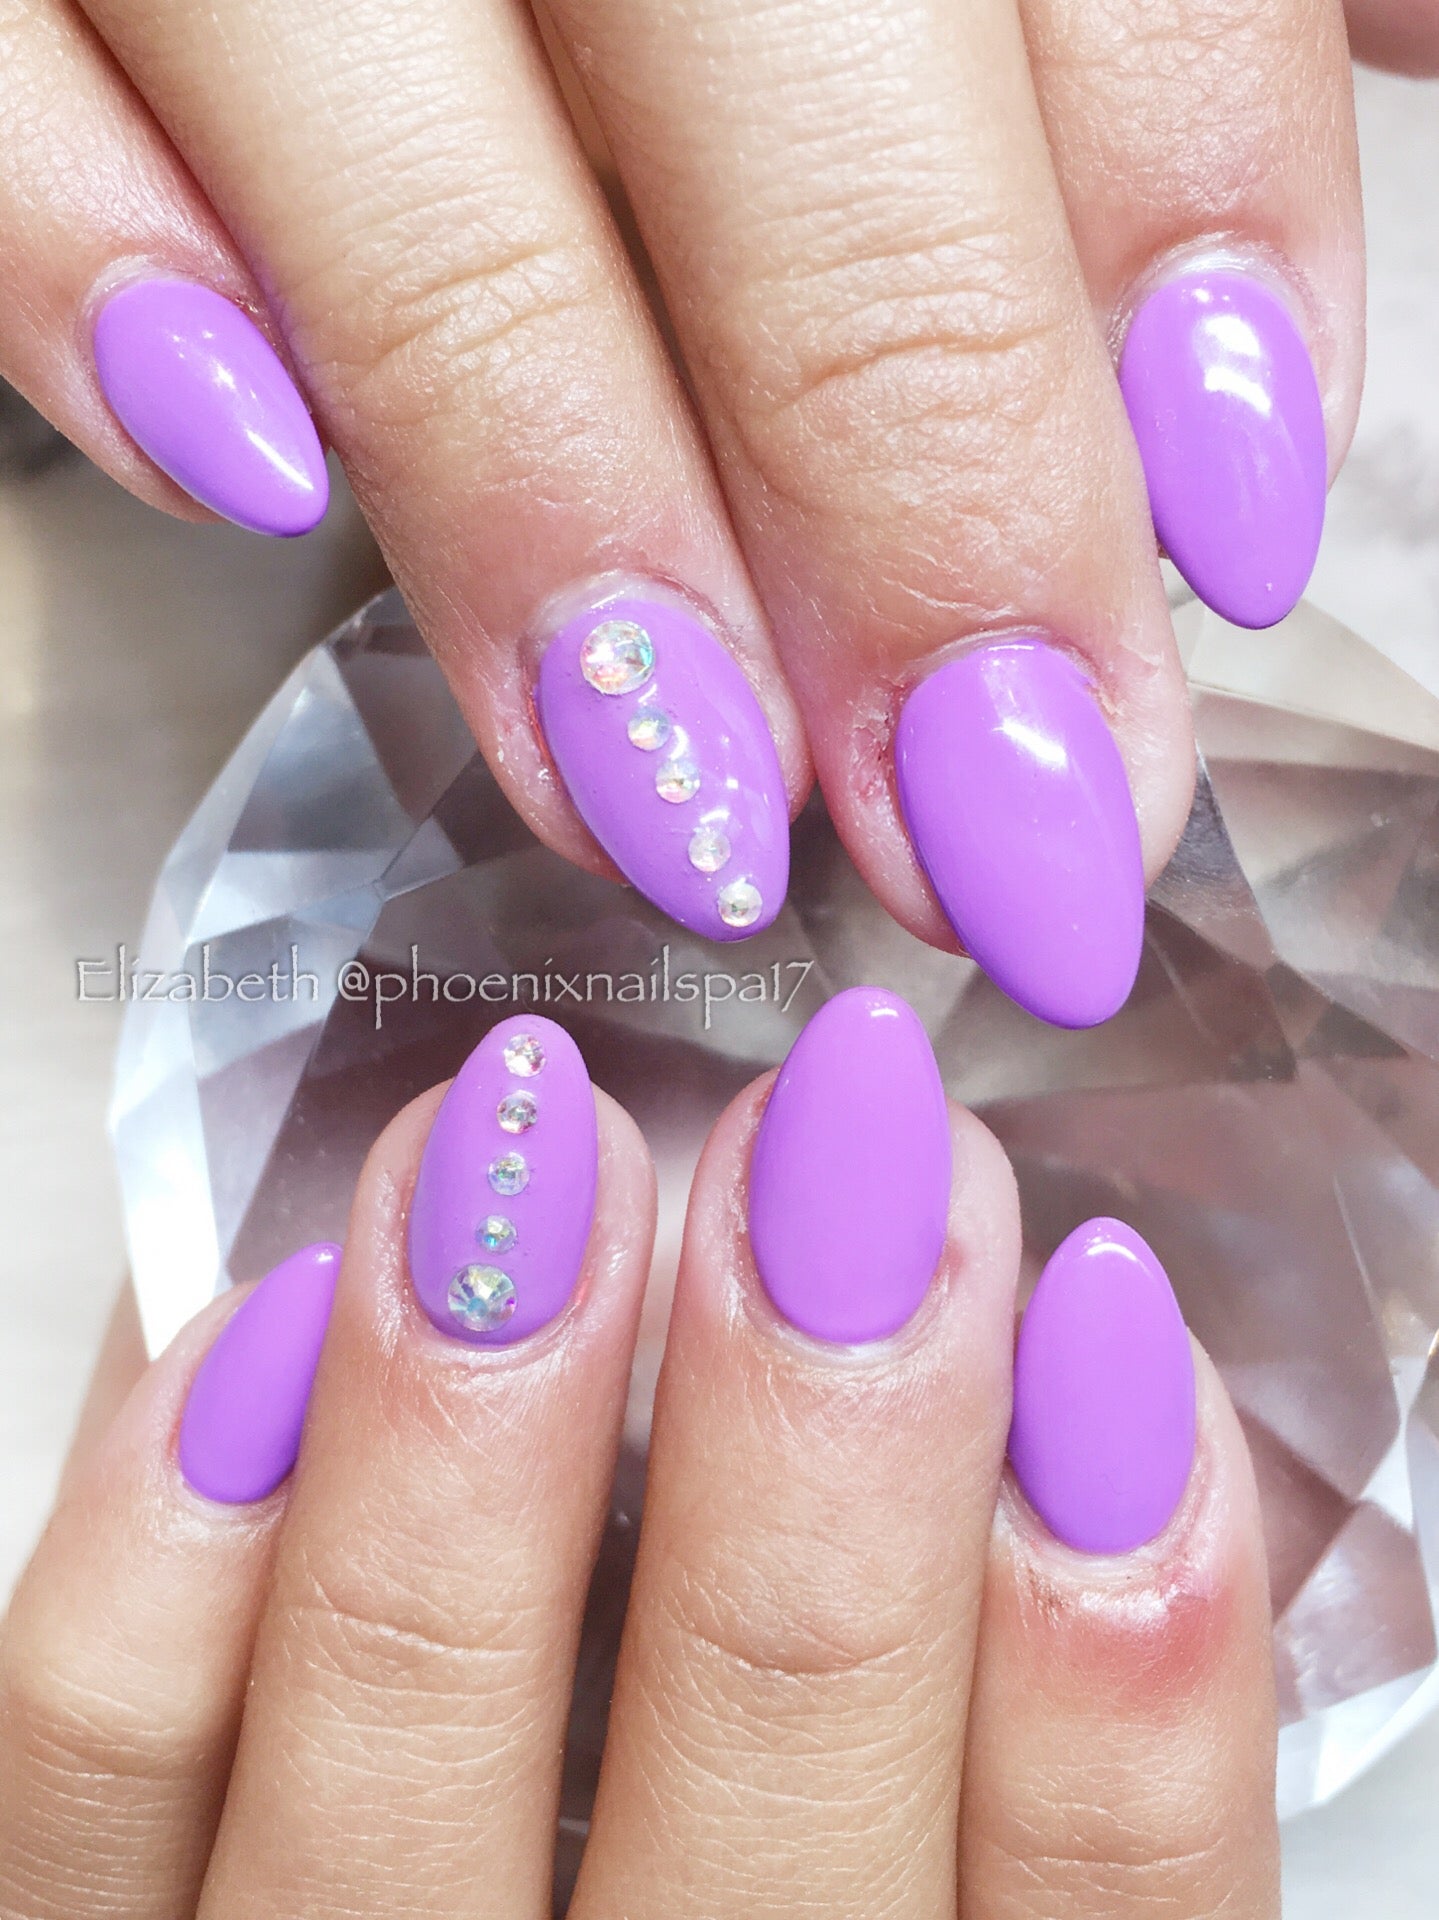 lady nails & spa | Best nail salon in PHOENIX, AZ 85027